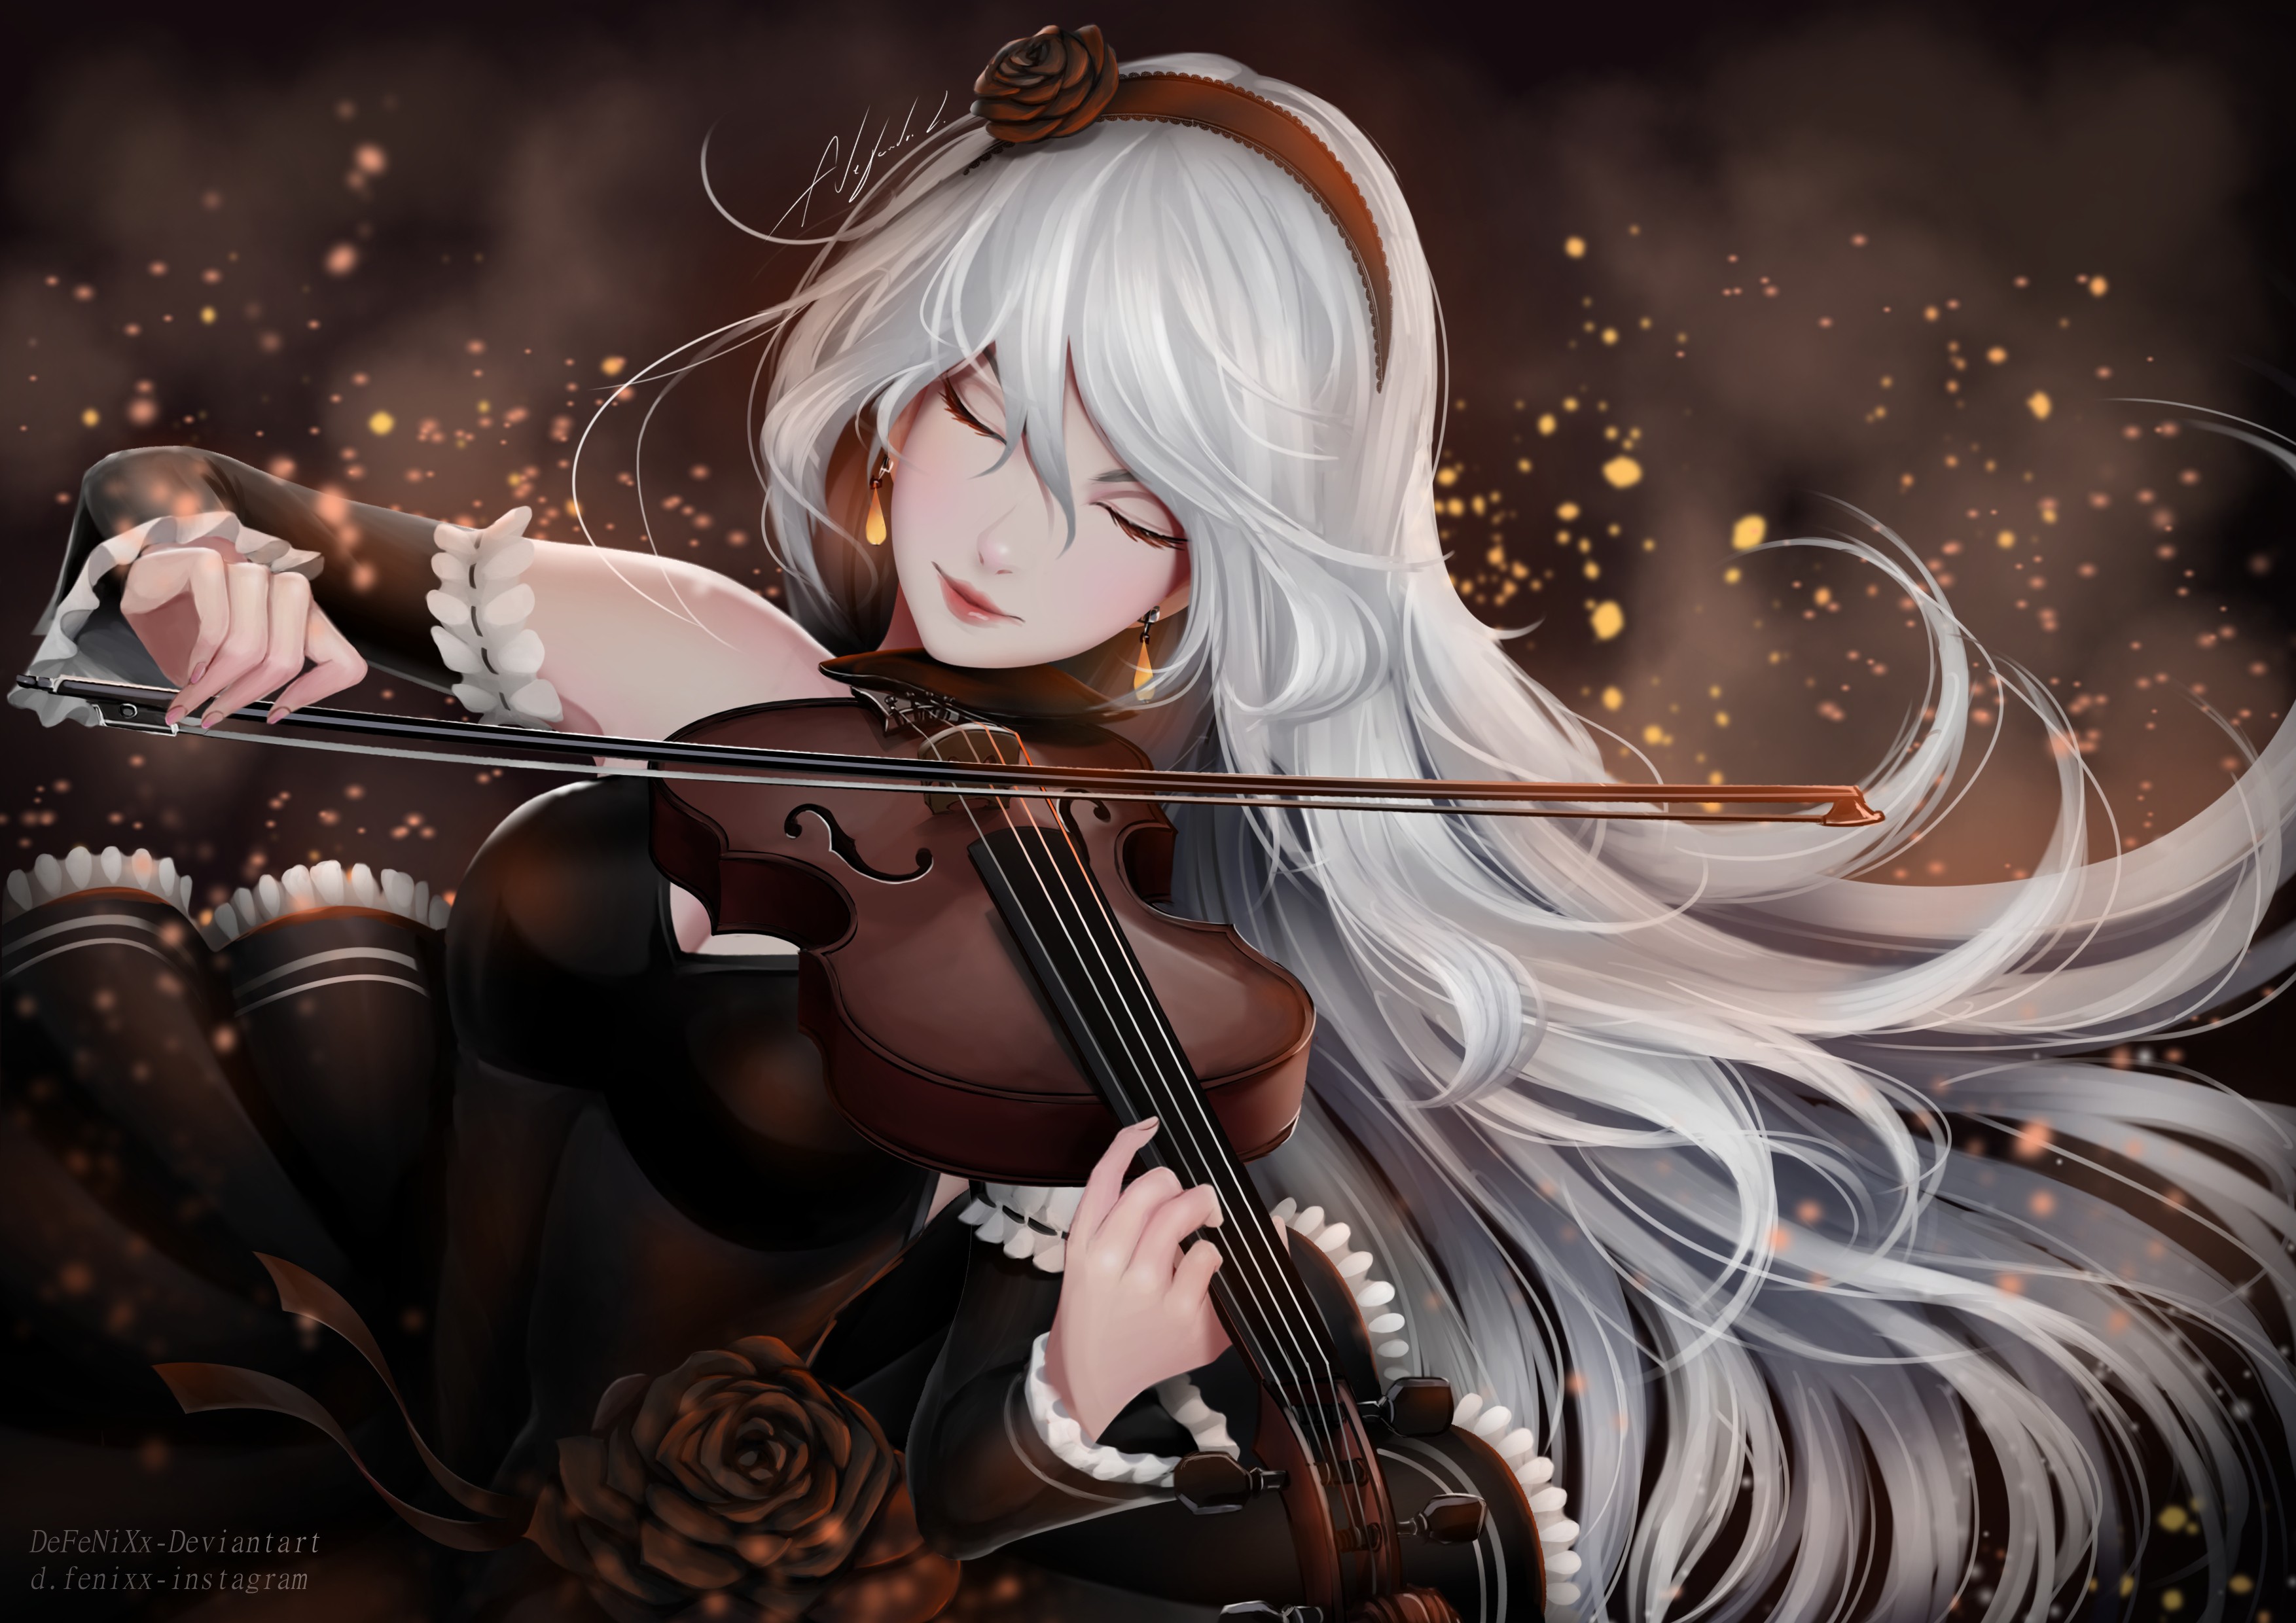 Violin Anime Girl by JacklinMendy on DeviantArt